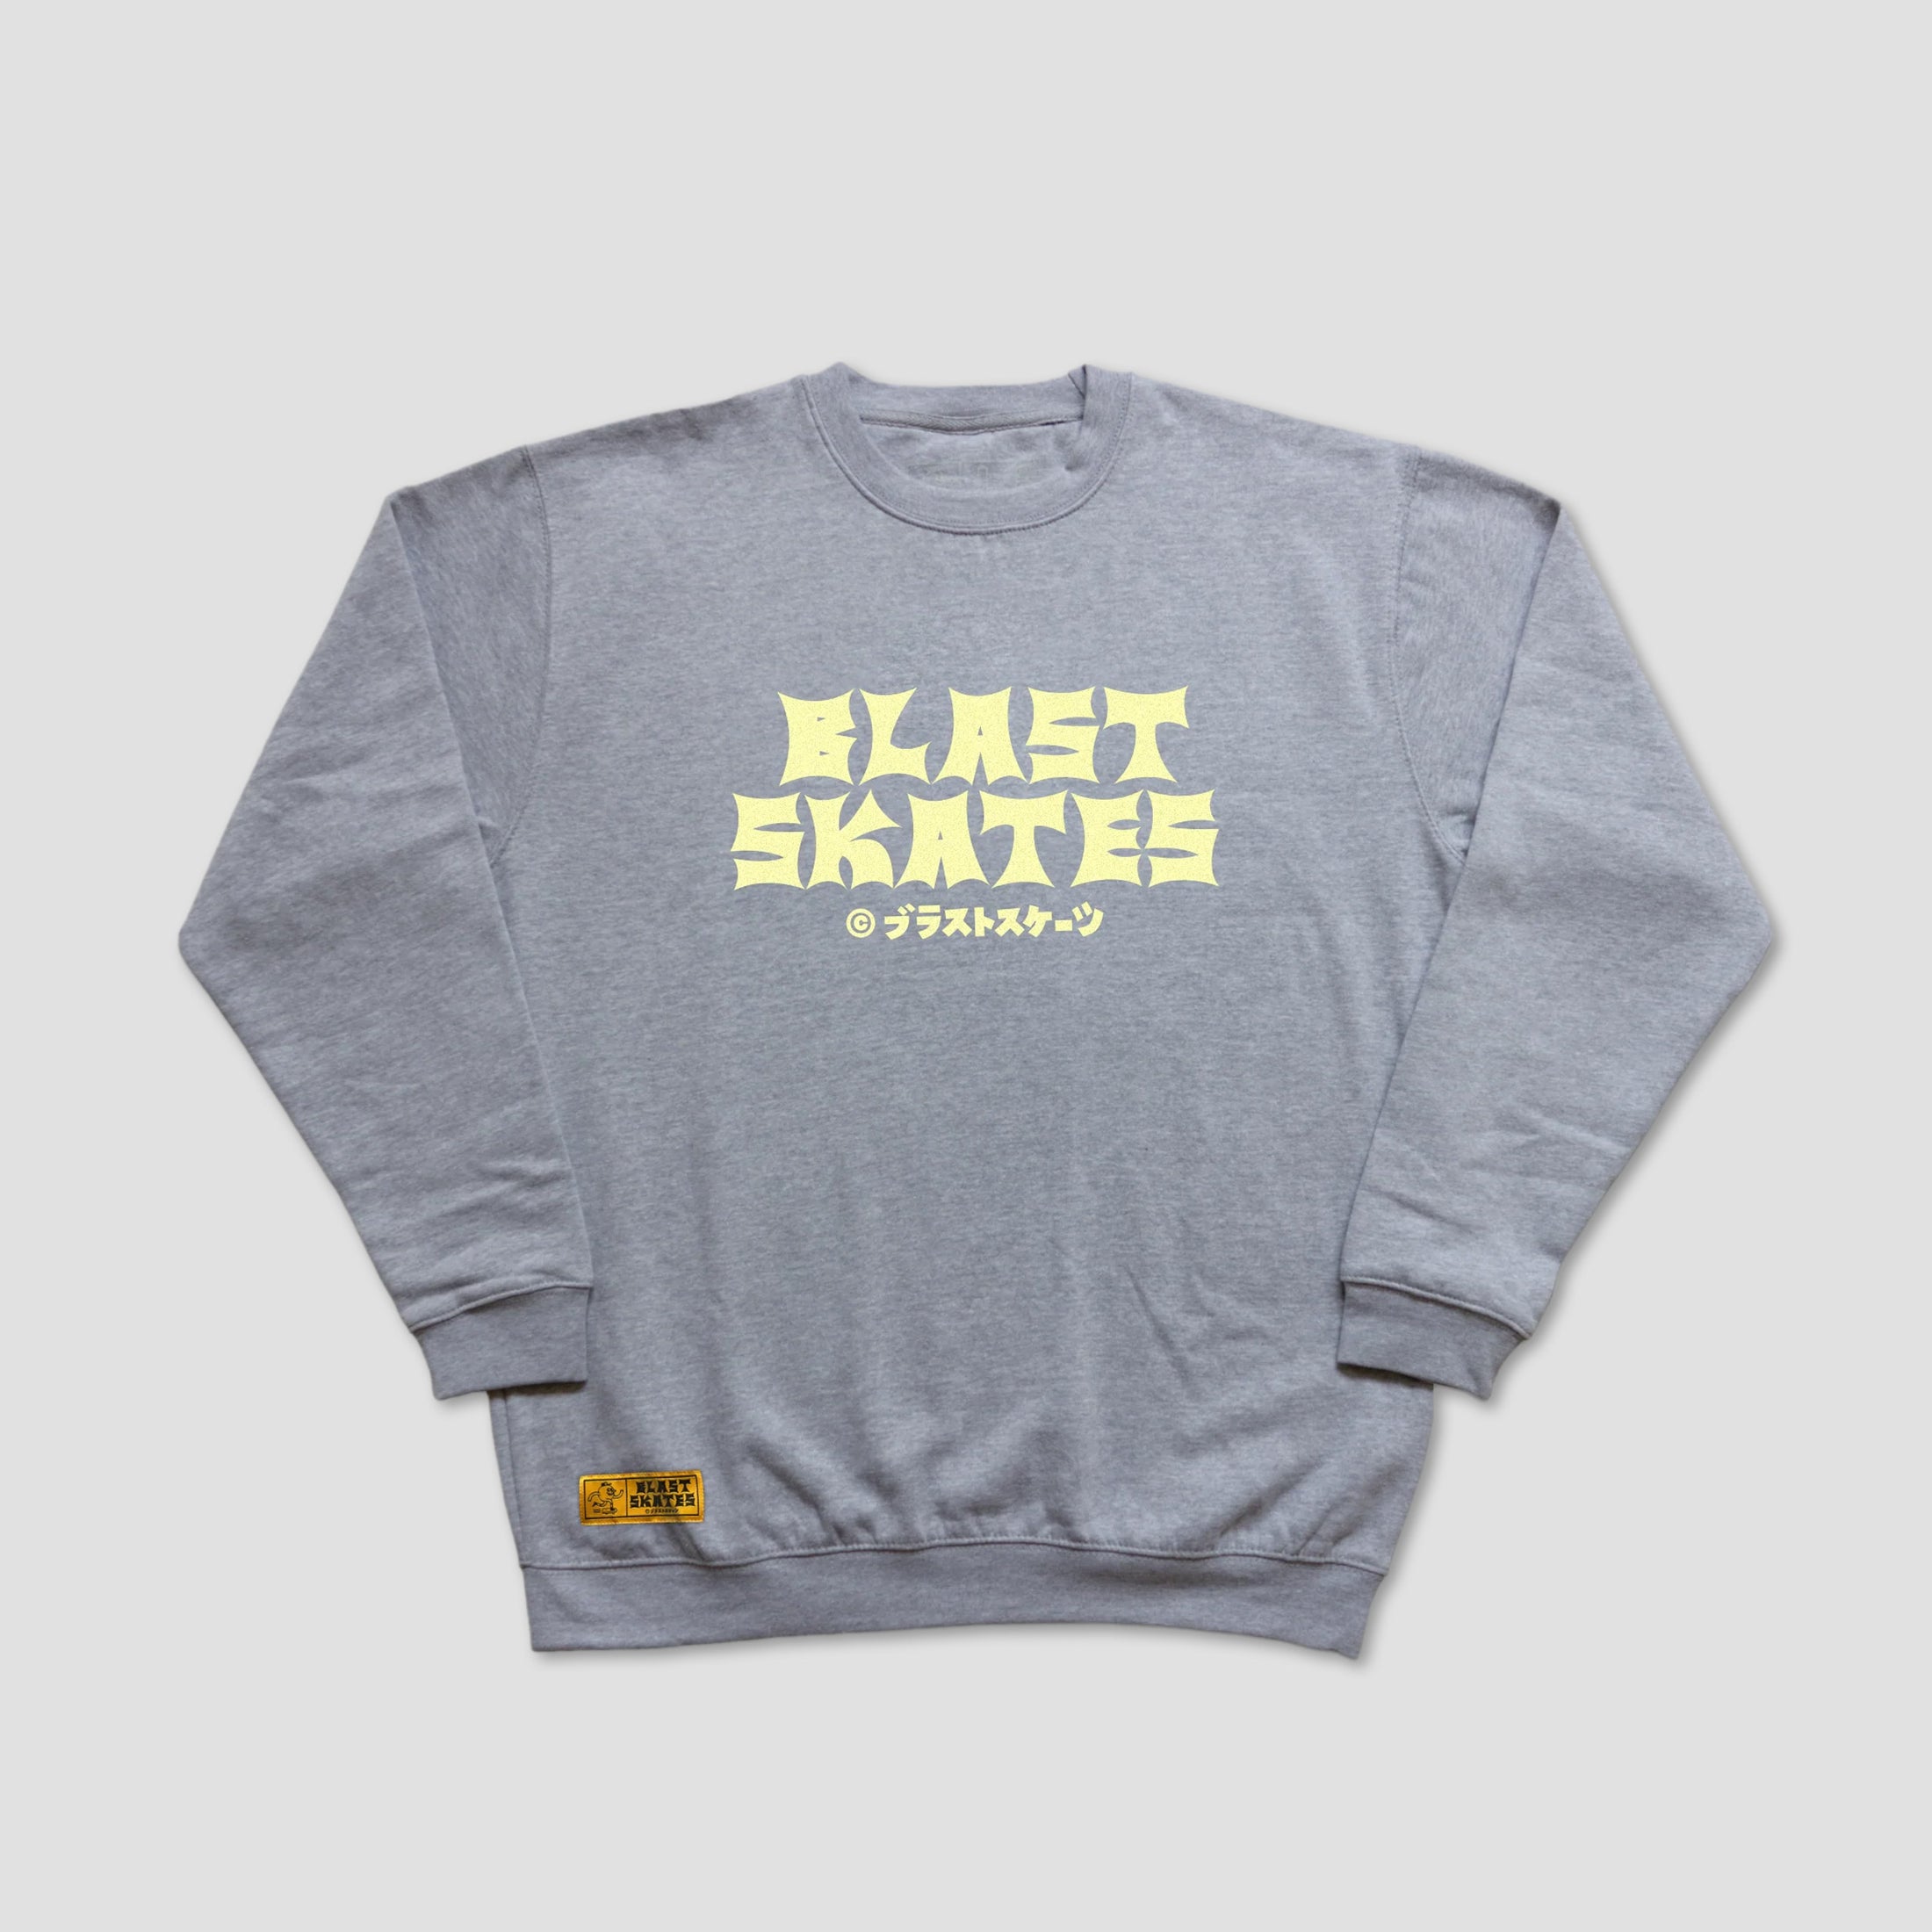 Blast Skates Golden Label Crew Ash Grey